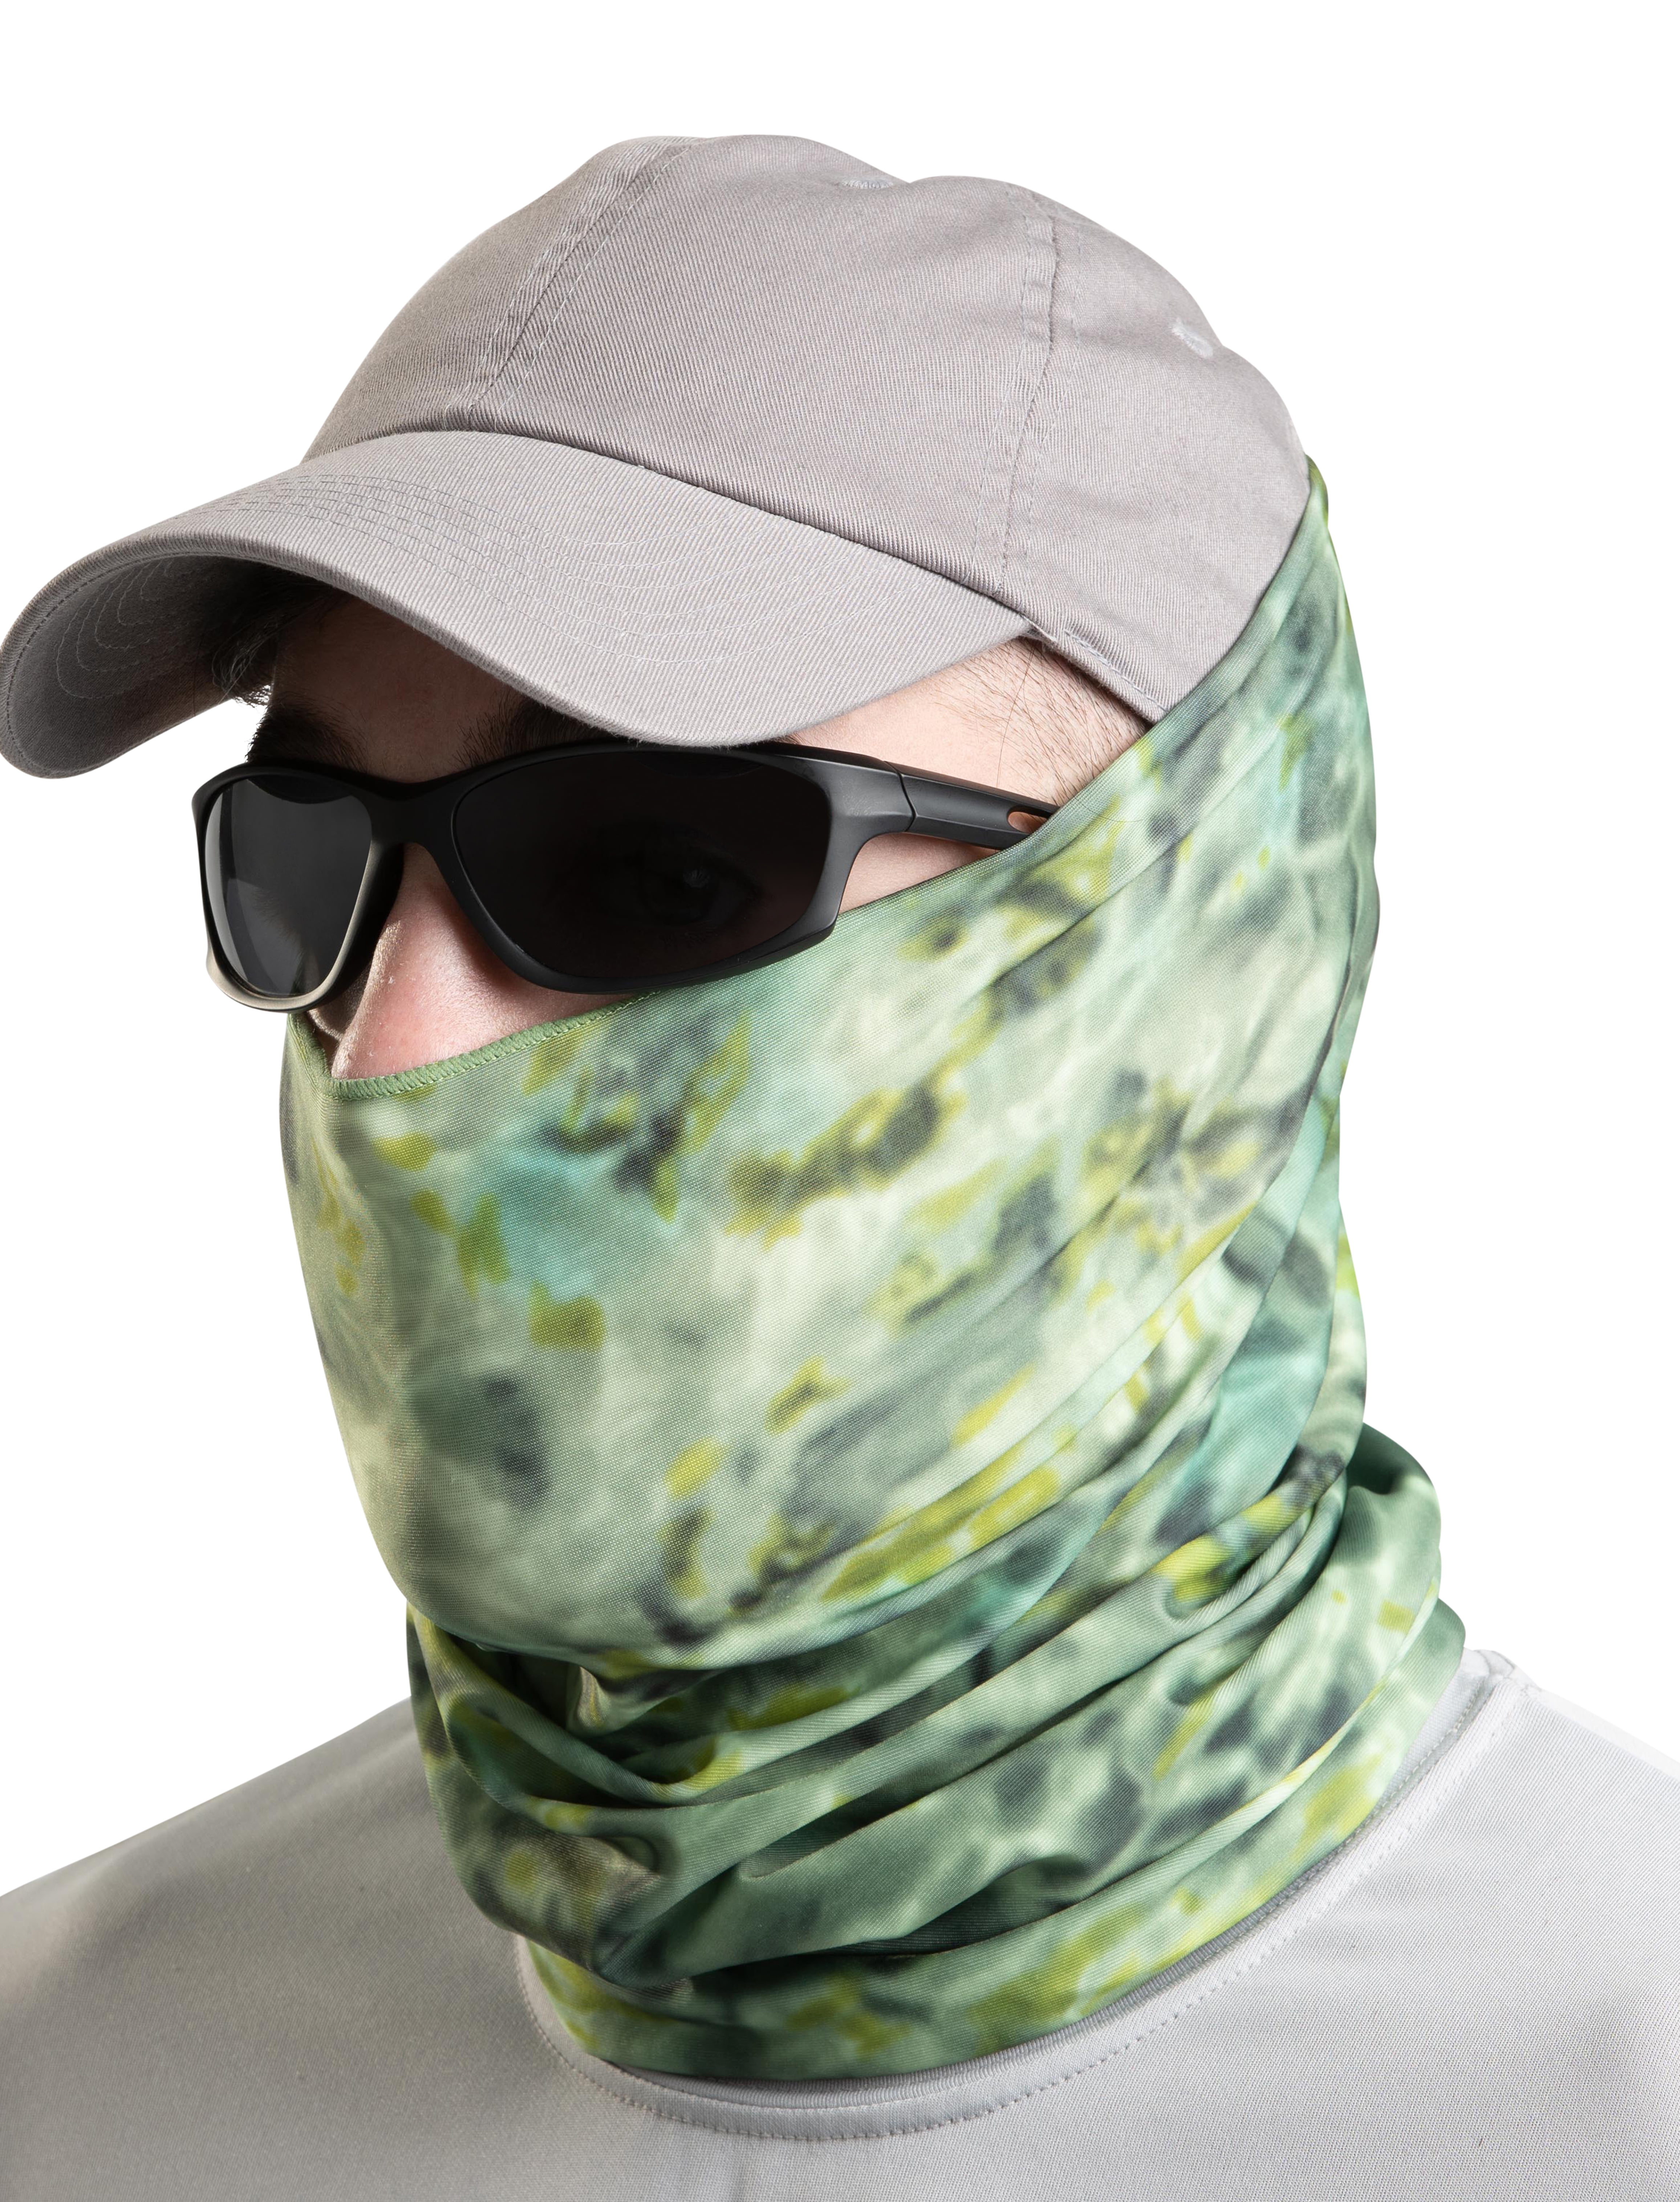 Details about   Neck Gaiter Face Mask Fishing Sun Headwear Protection Desert Digital Camo 